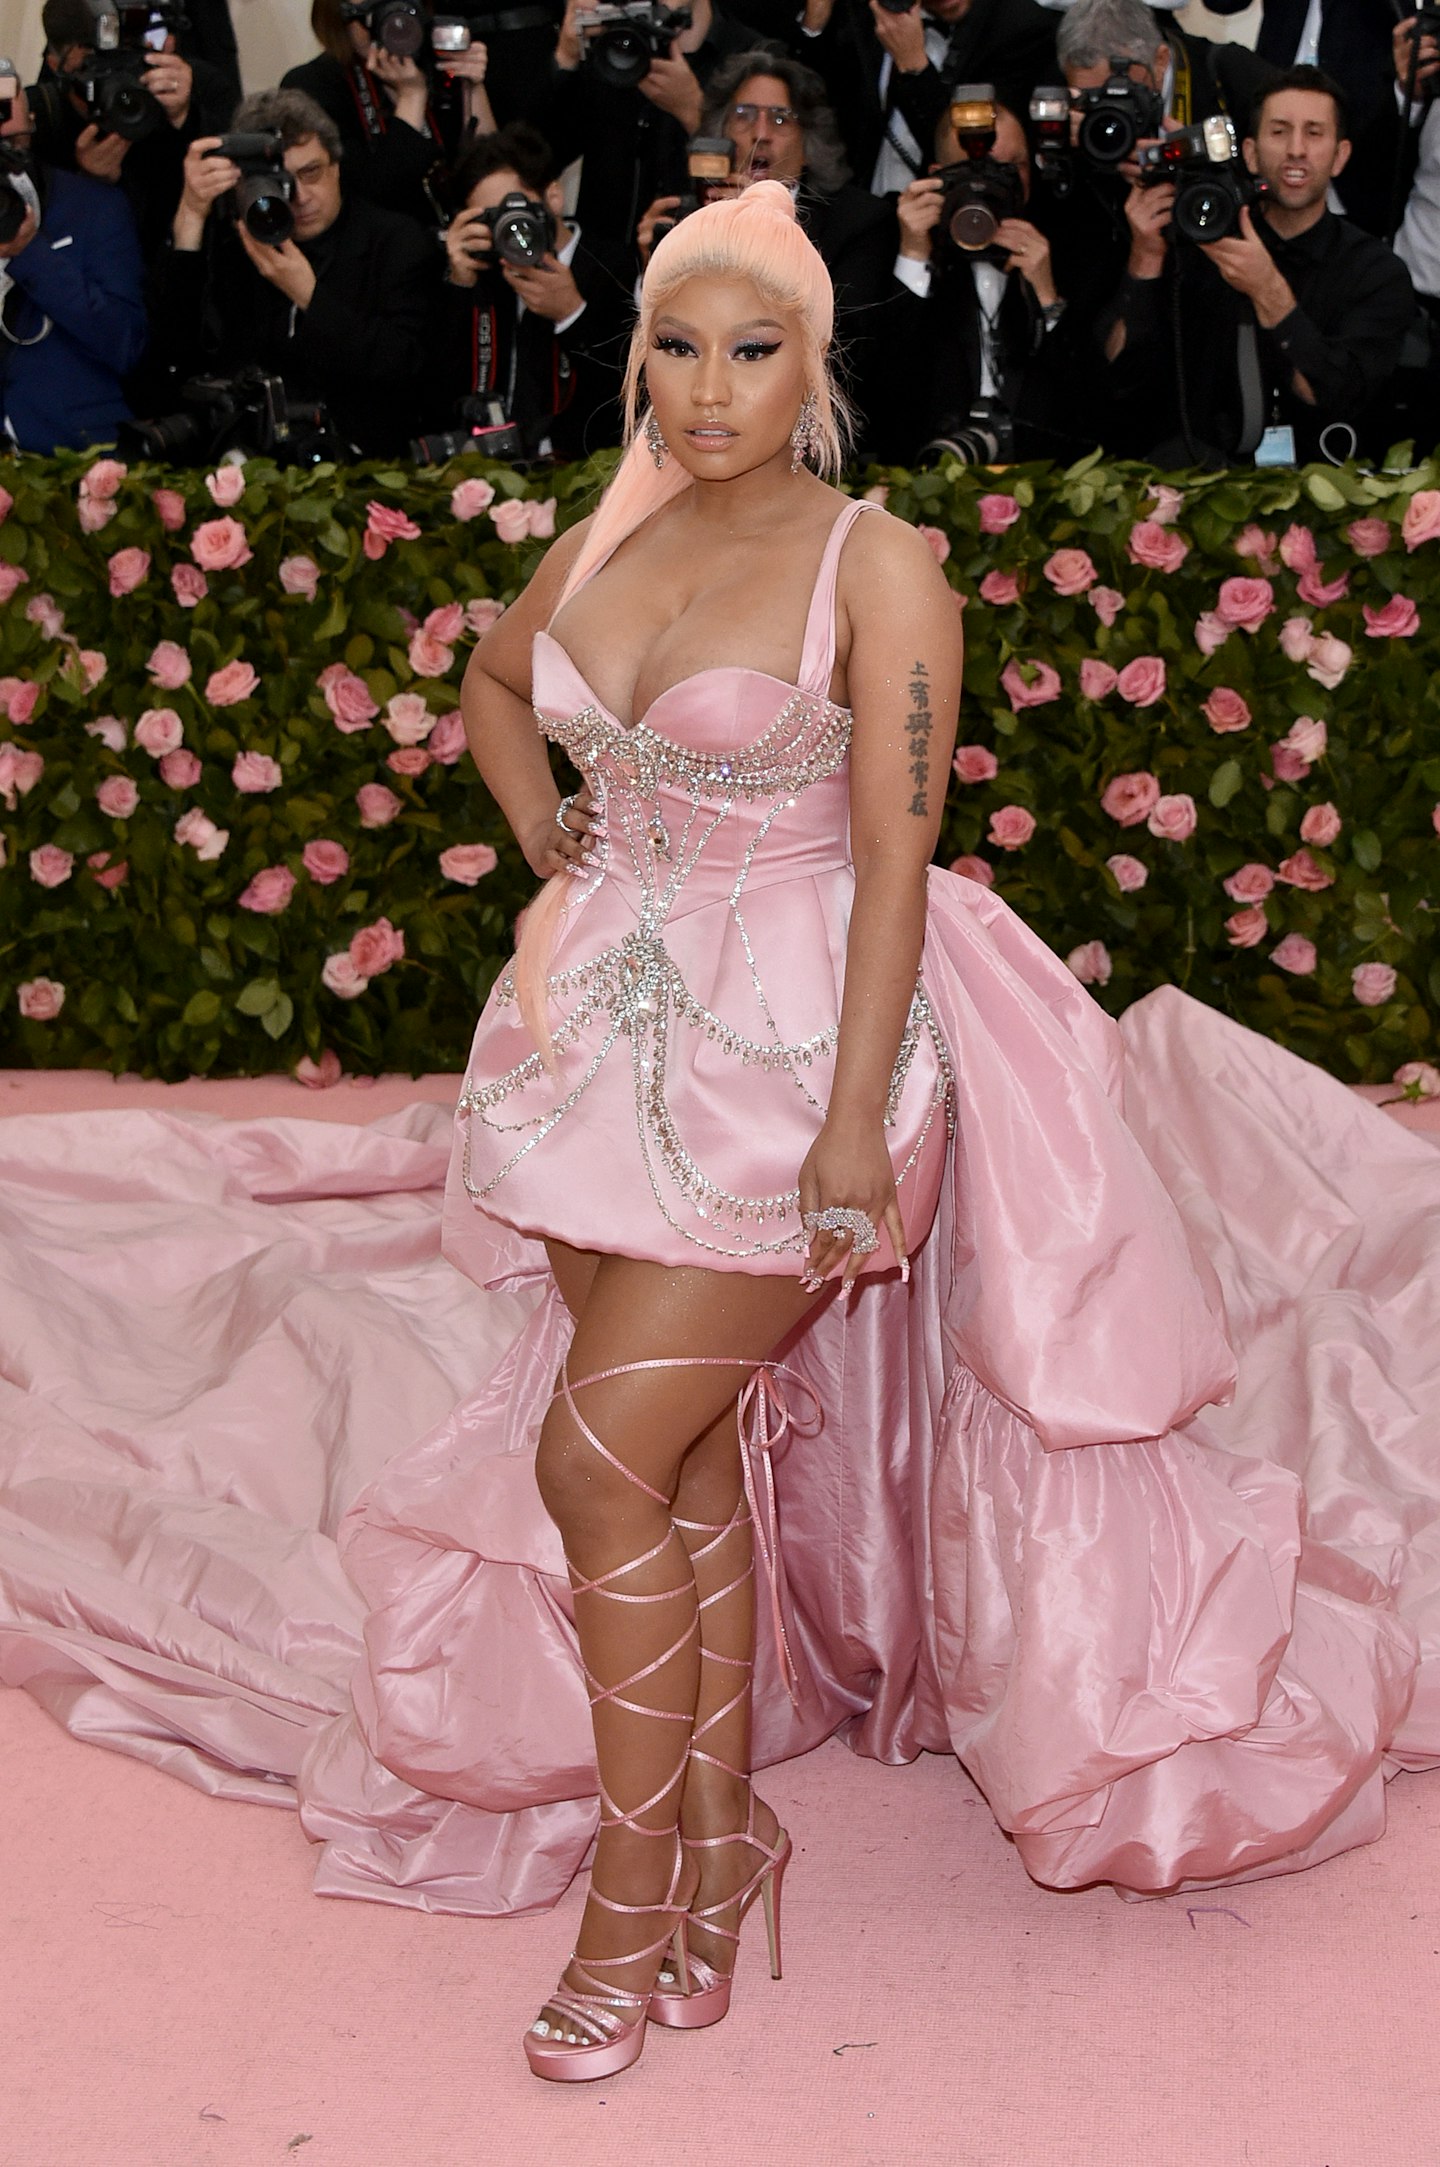 Nicki Minaj wore a pale pink gown with a dramatic train by Prabal Gurung